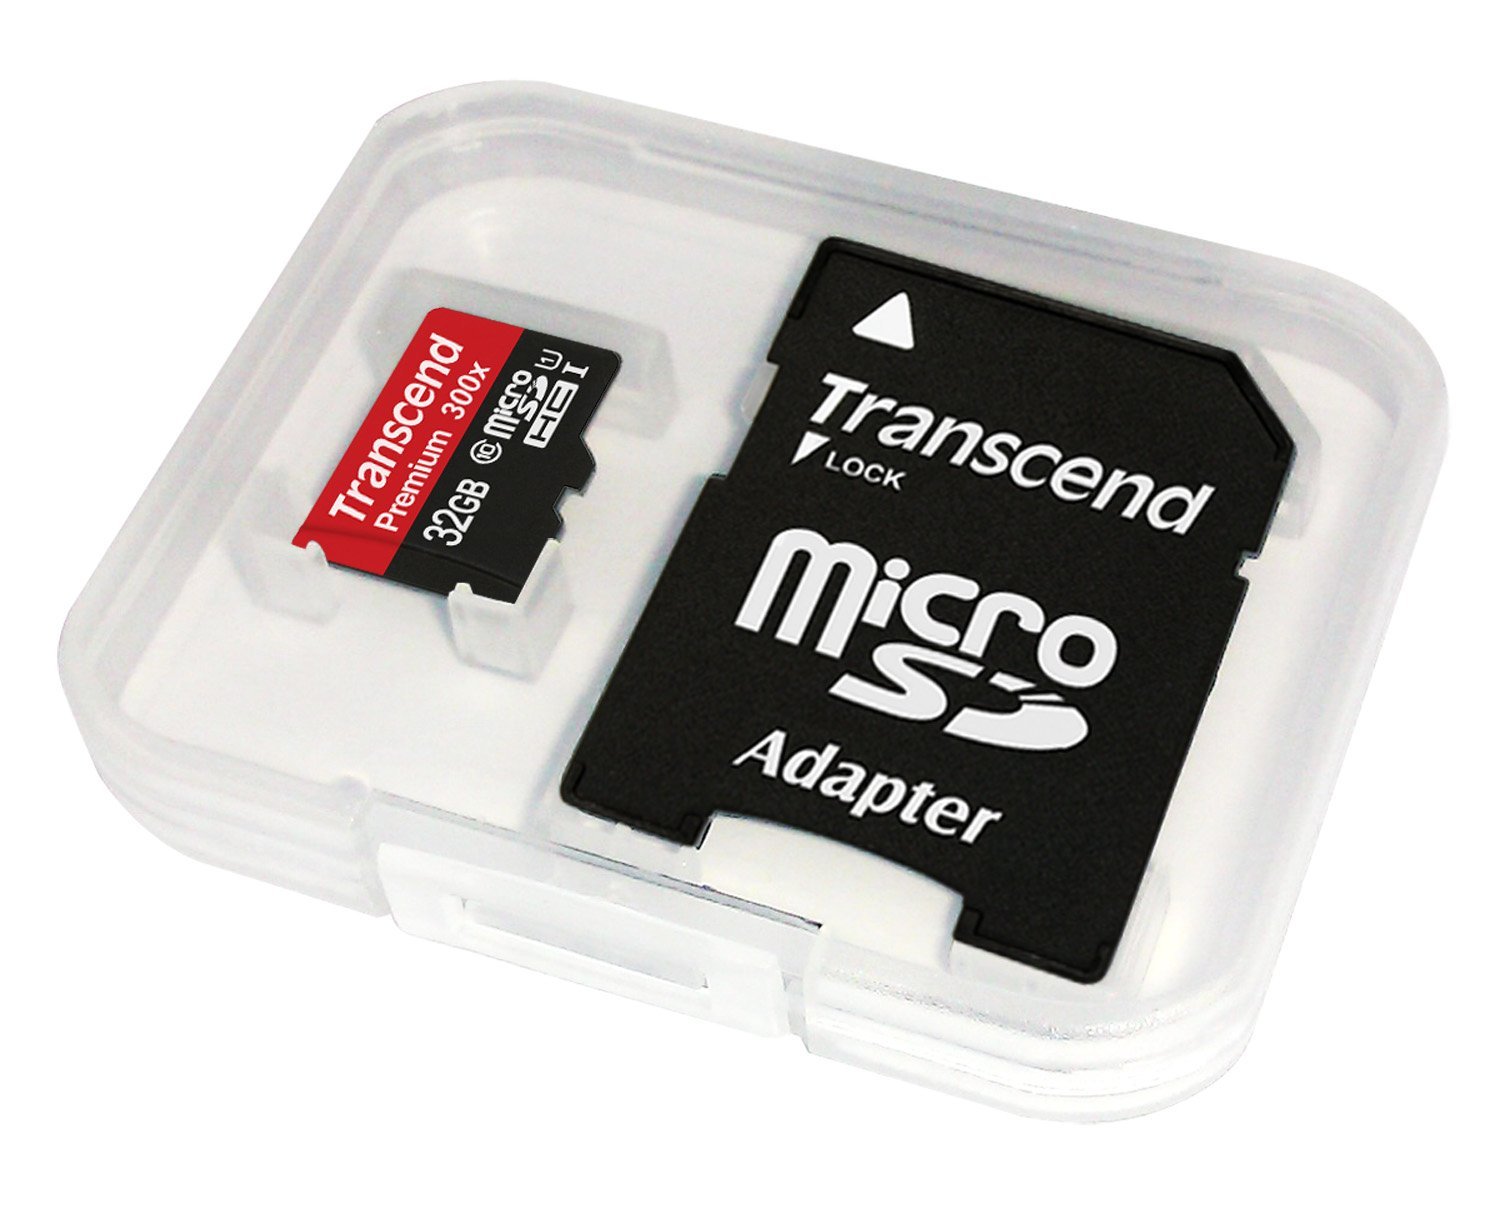 Микро флешка 64 гб. Флешка 64 ГБ микро SD. Transcend 128gb MICROSD Transcend + SD адаптер ( ). Трансенд 128 ГБ флешка Трансенд микро СД. Карта памяти Transcend MICROSDXC 64gb 300x.